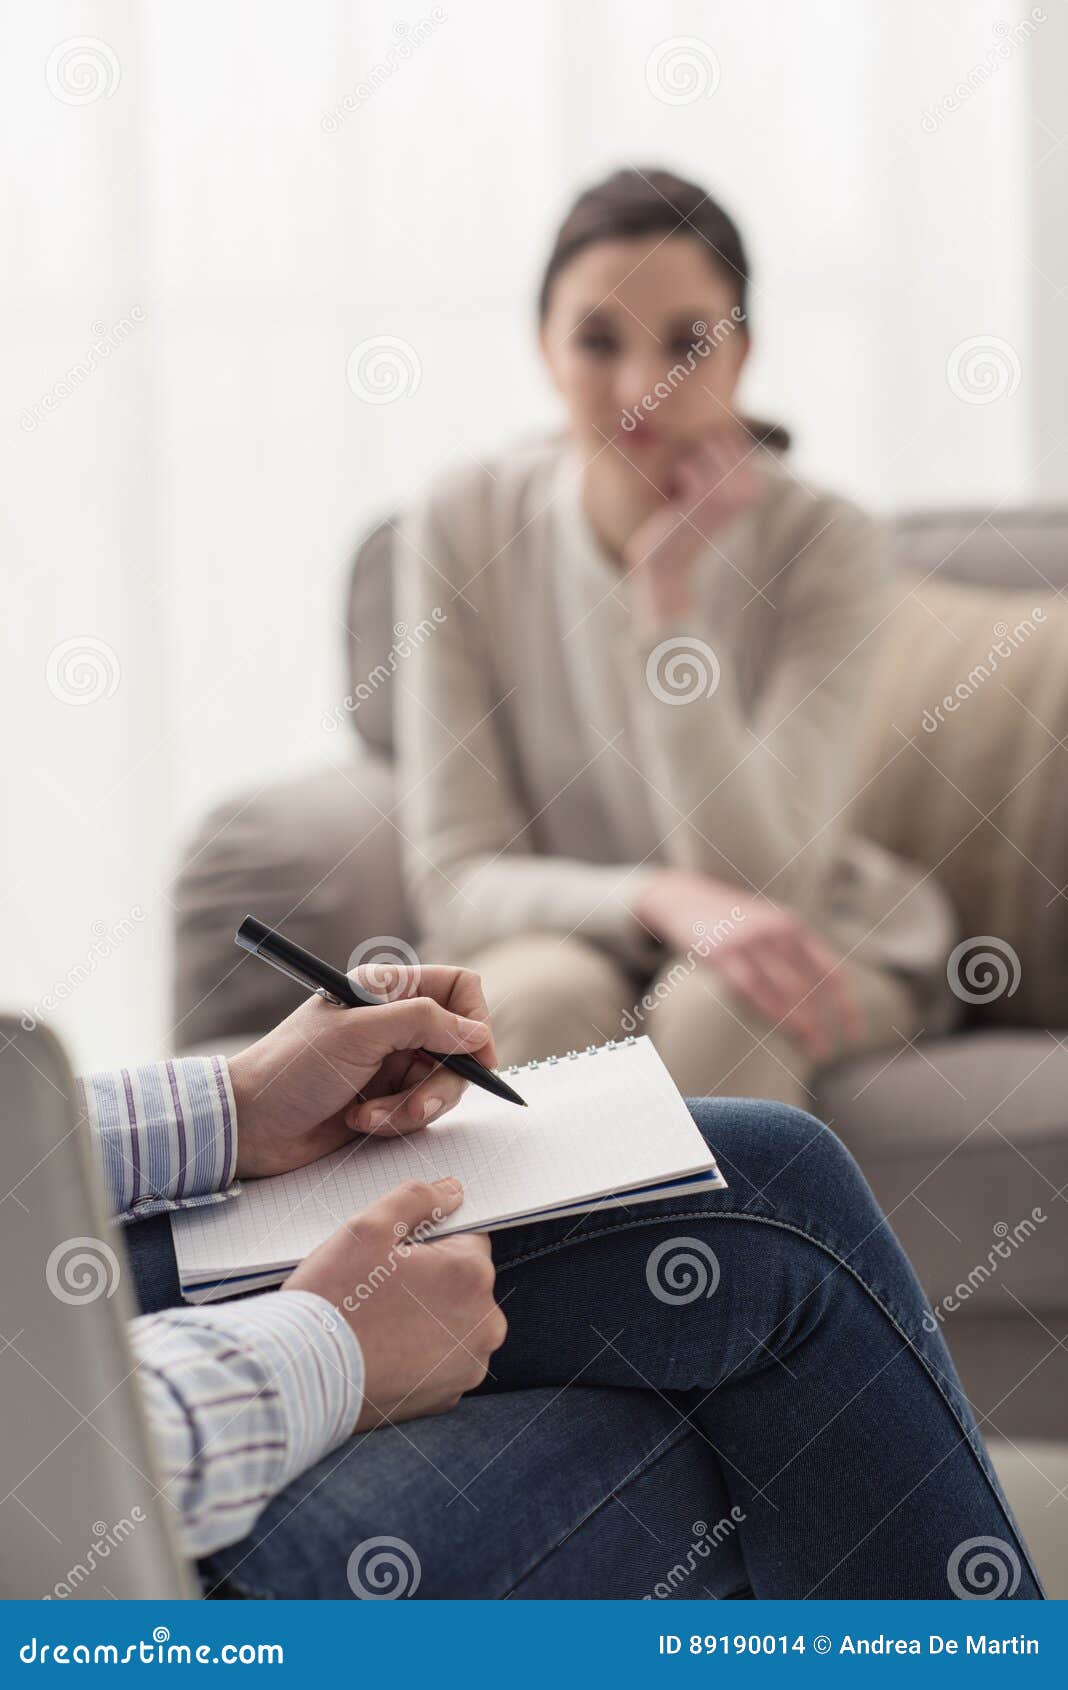 psychologist listening to her patient